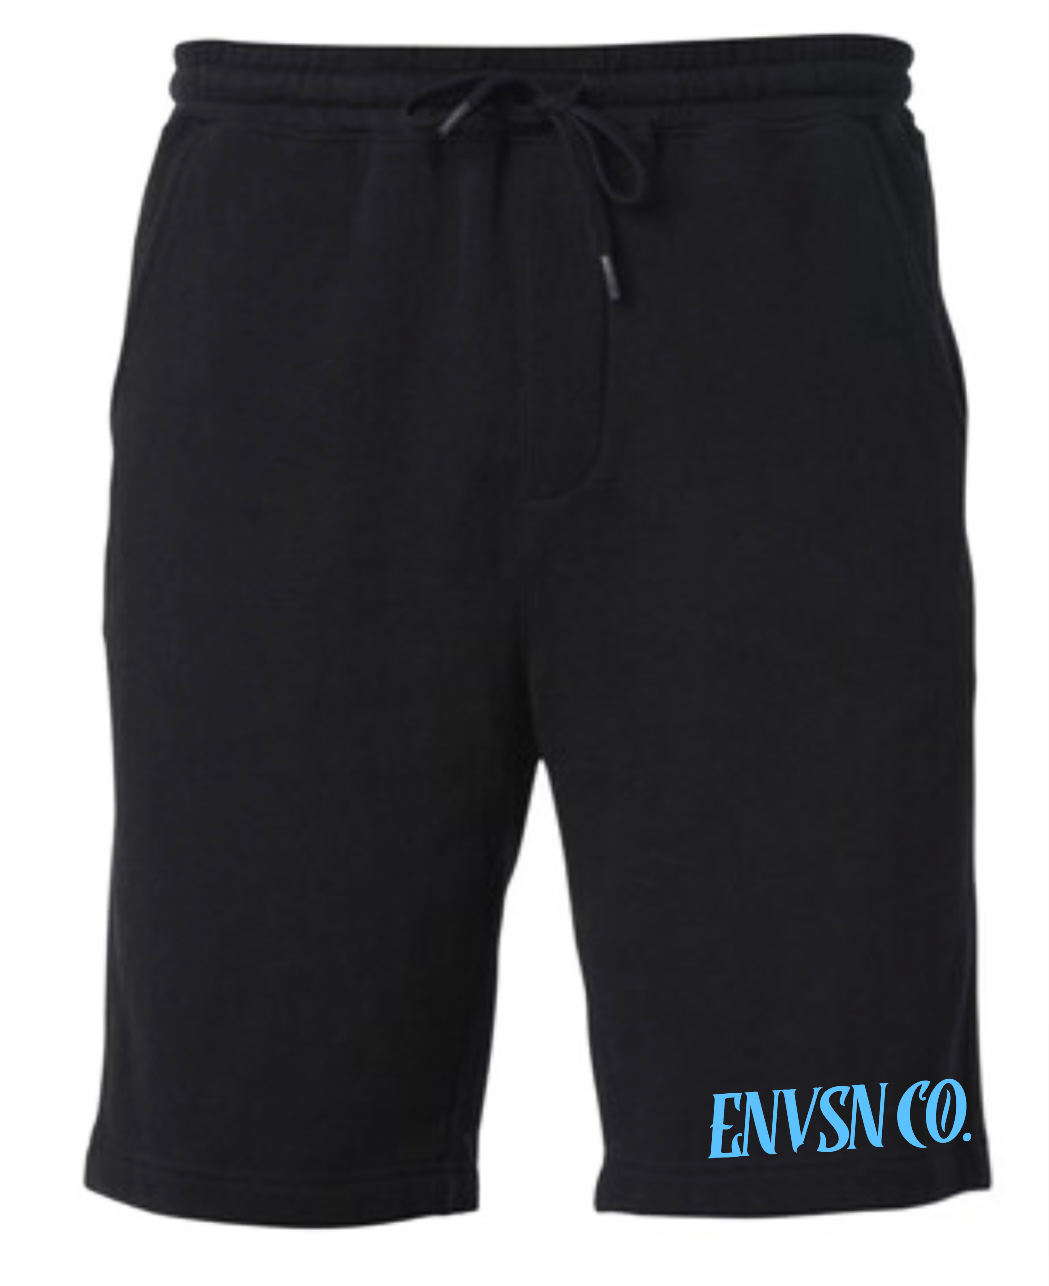 ENVSN CO. Midweight Fleece Shorts